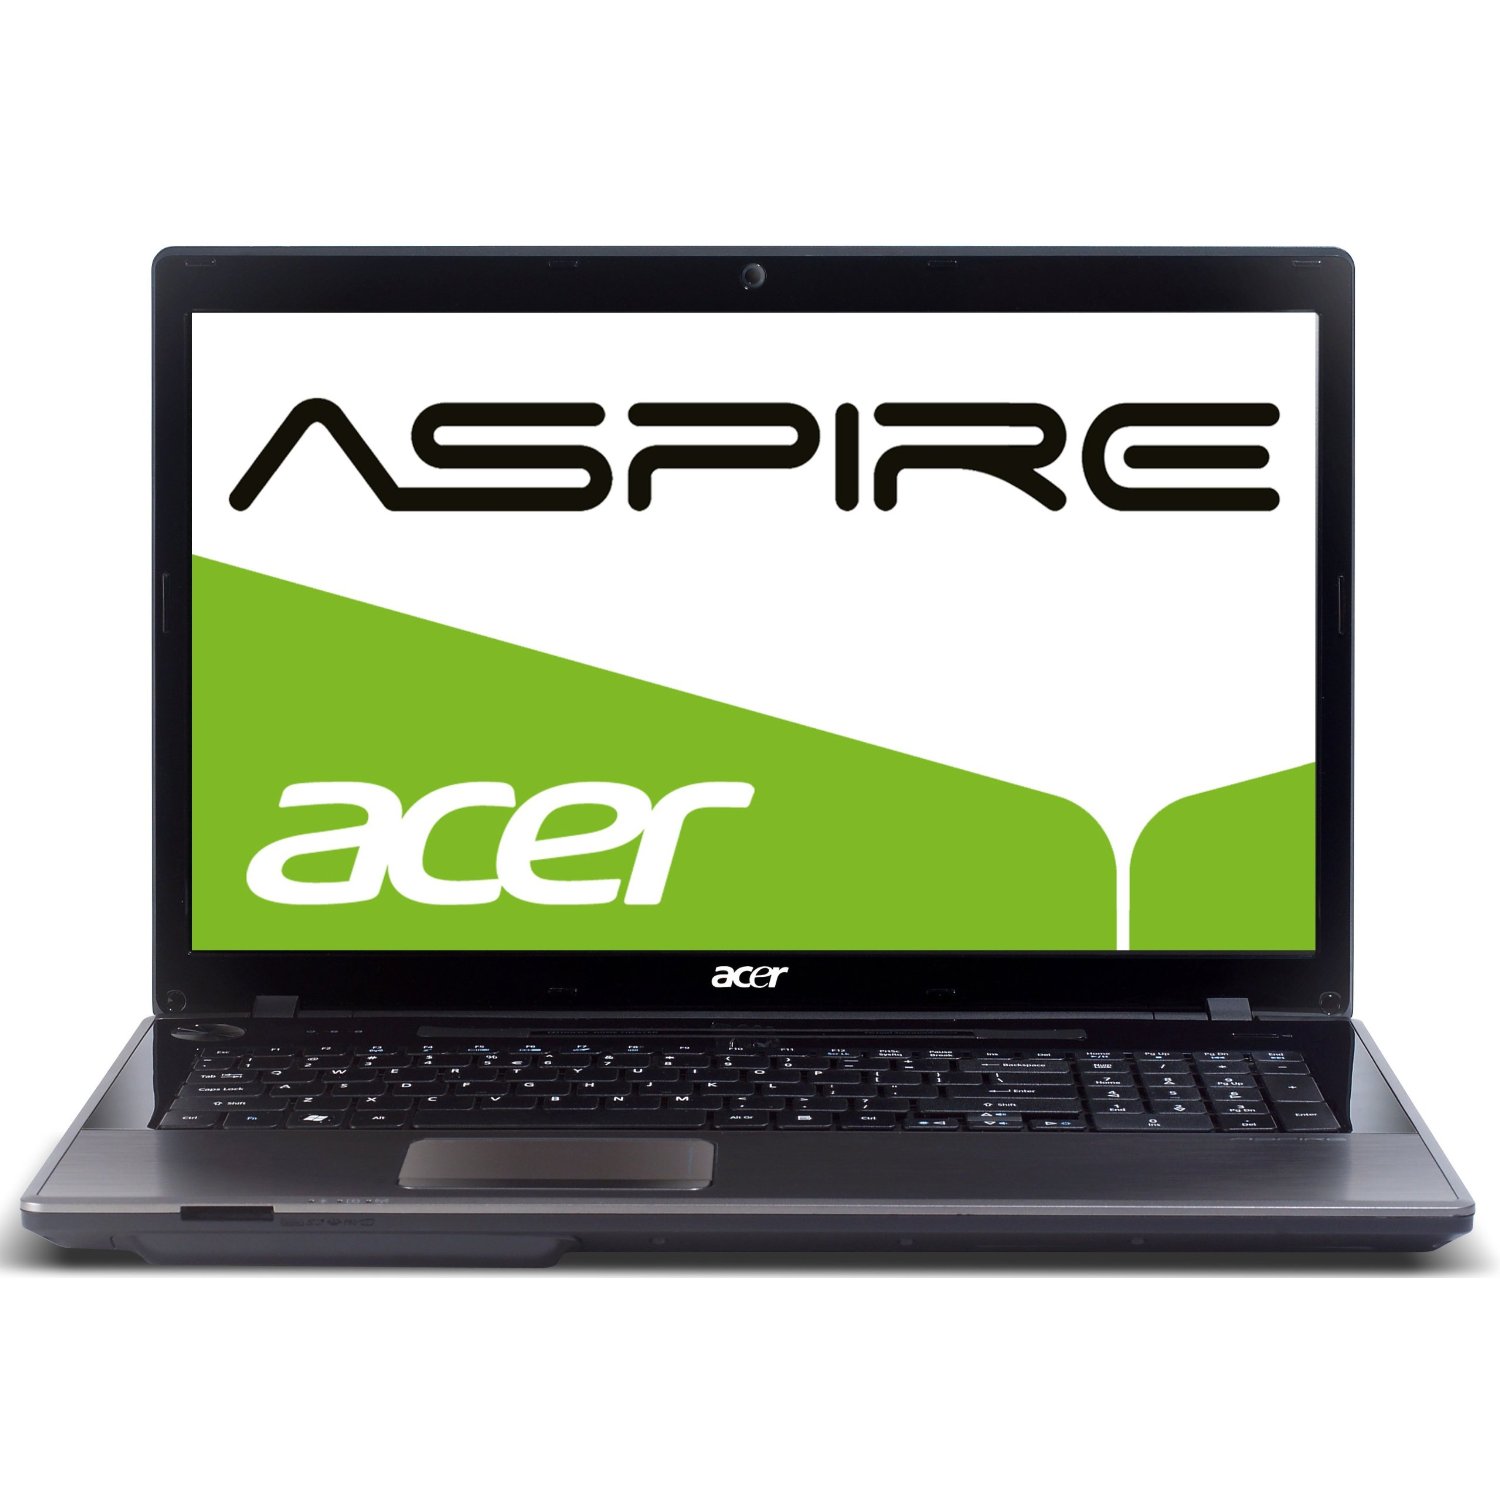 acer aspire 7750g drivers windows 7 64 bit download